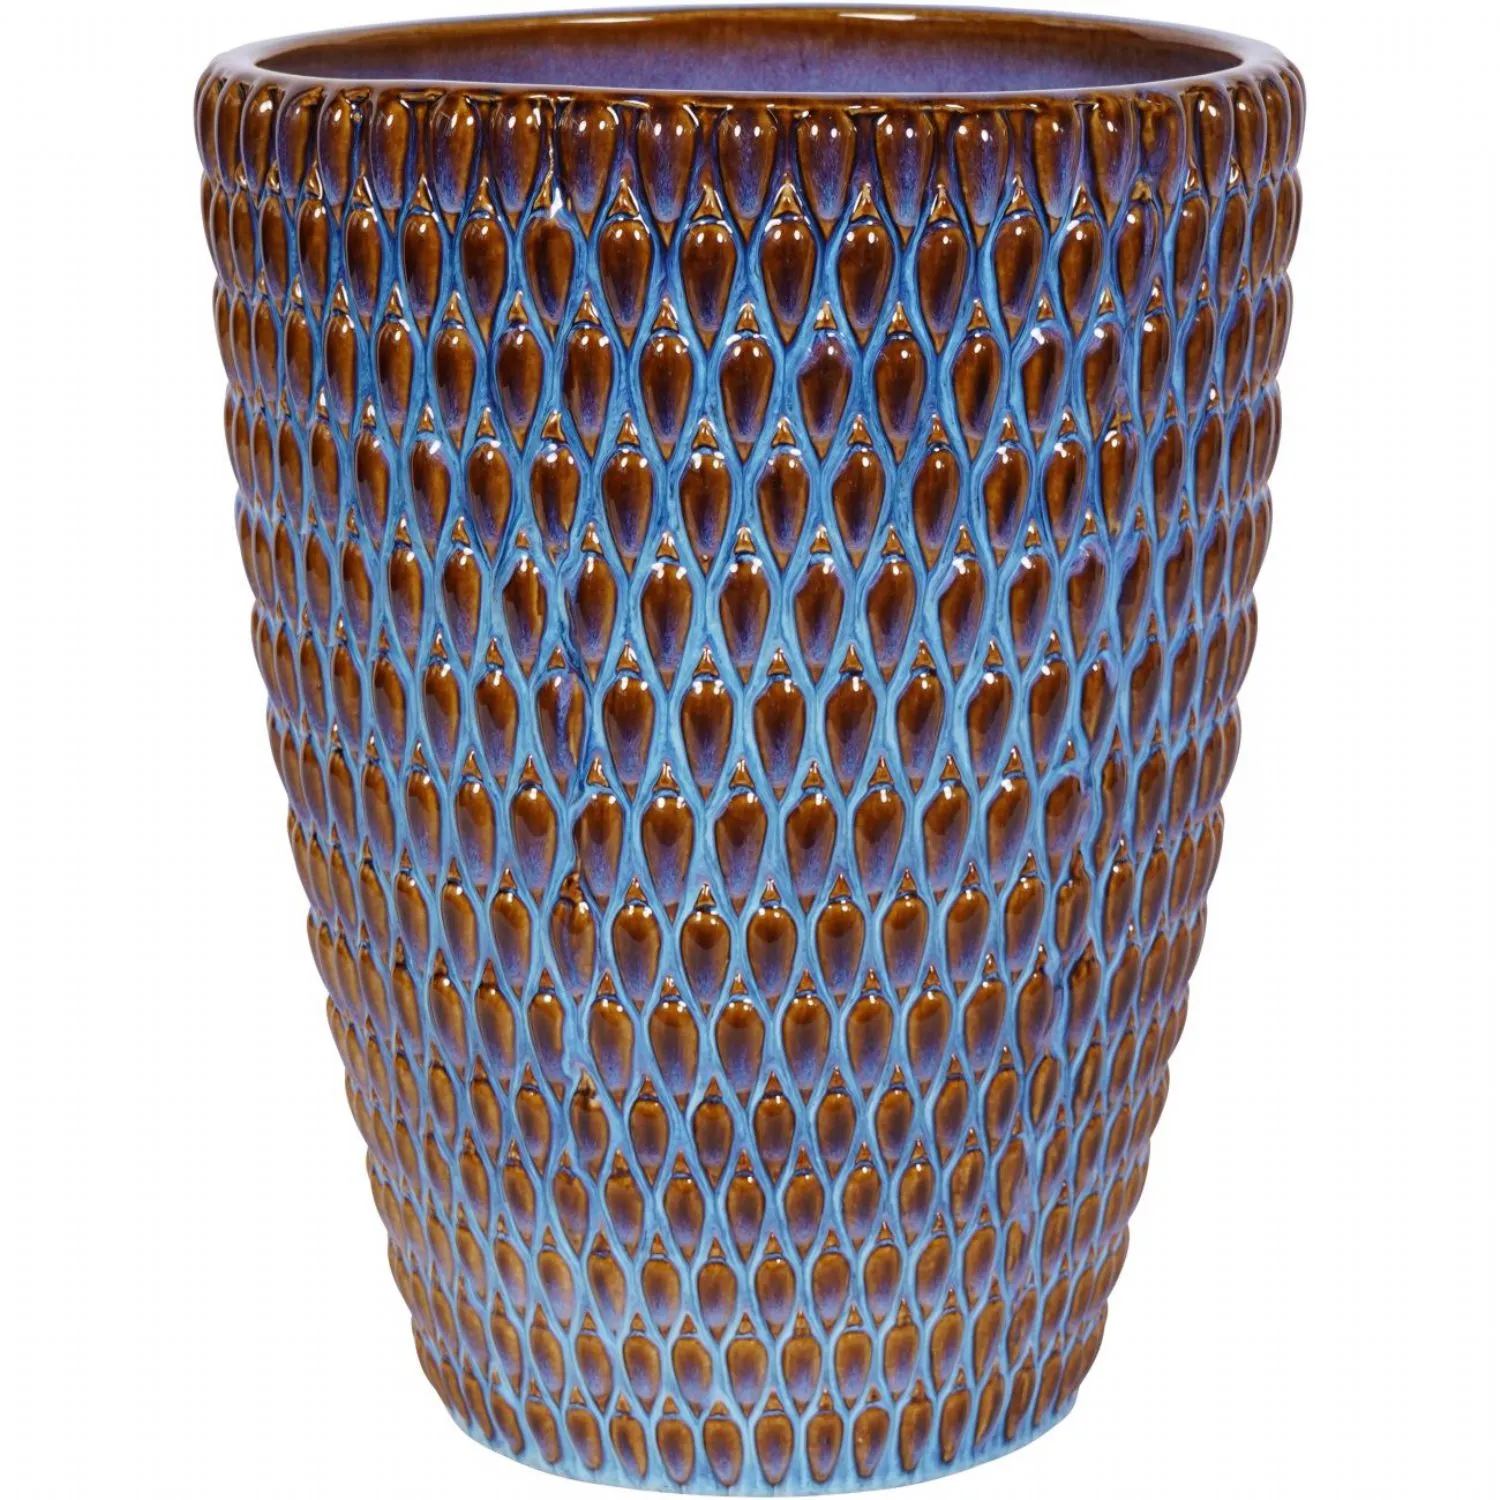 Mediterranean Reactive Glaze Ceramic Planter Blue